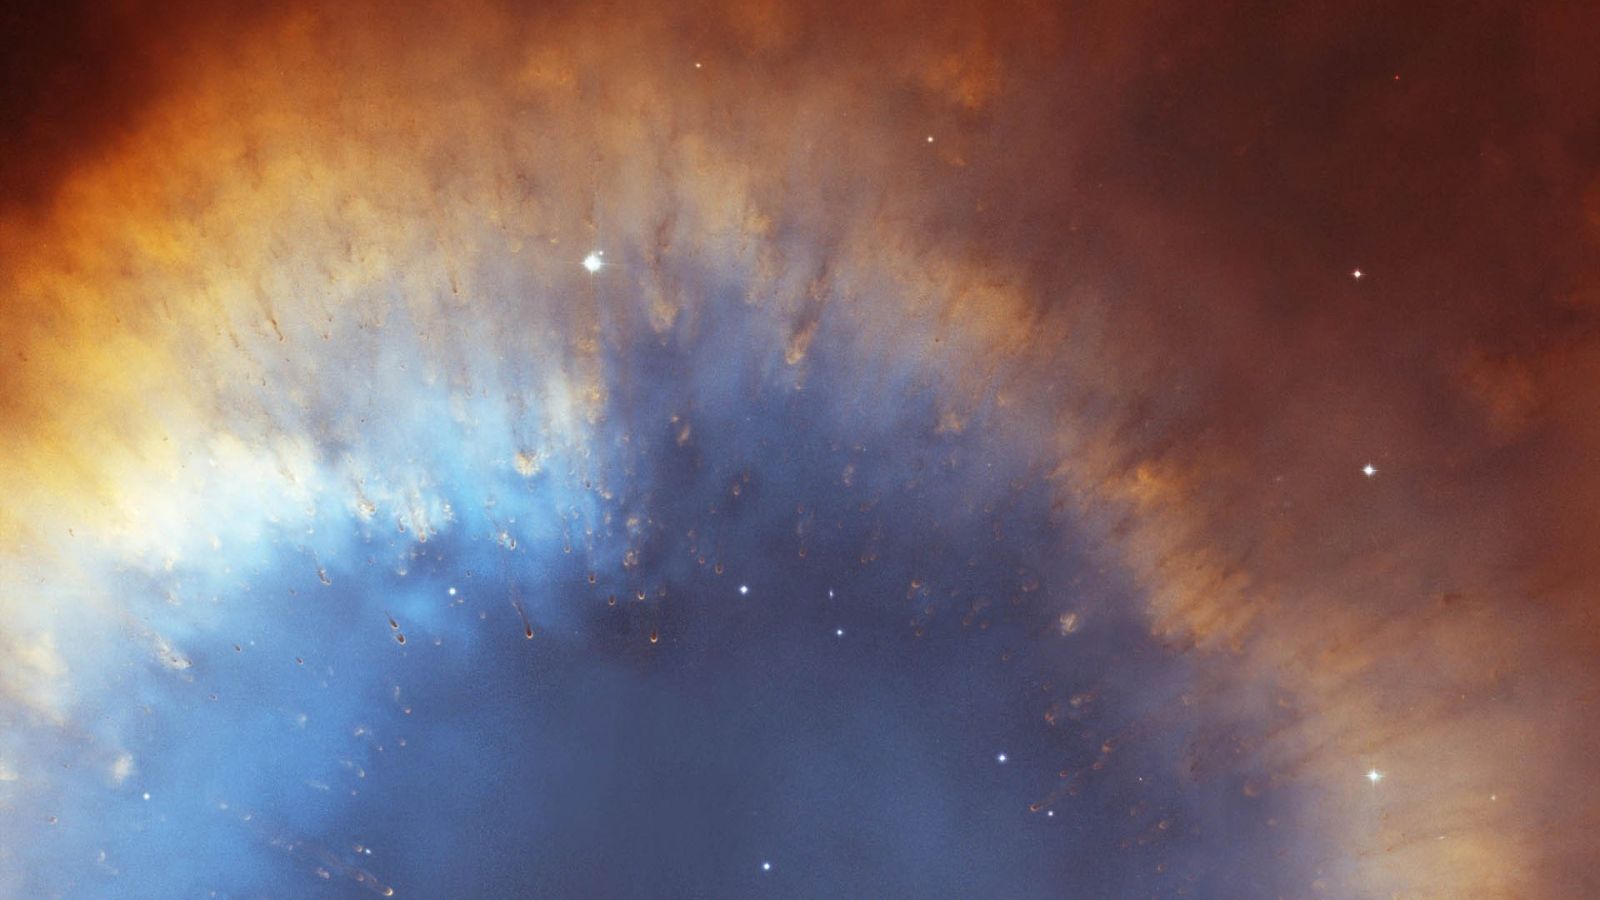 Helix Nebula wallpaper in 1600x900 resolution